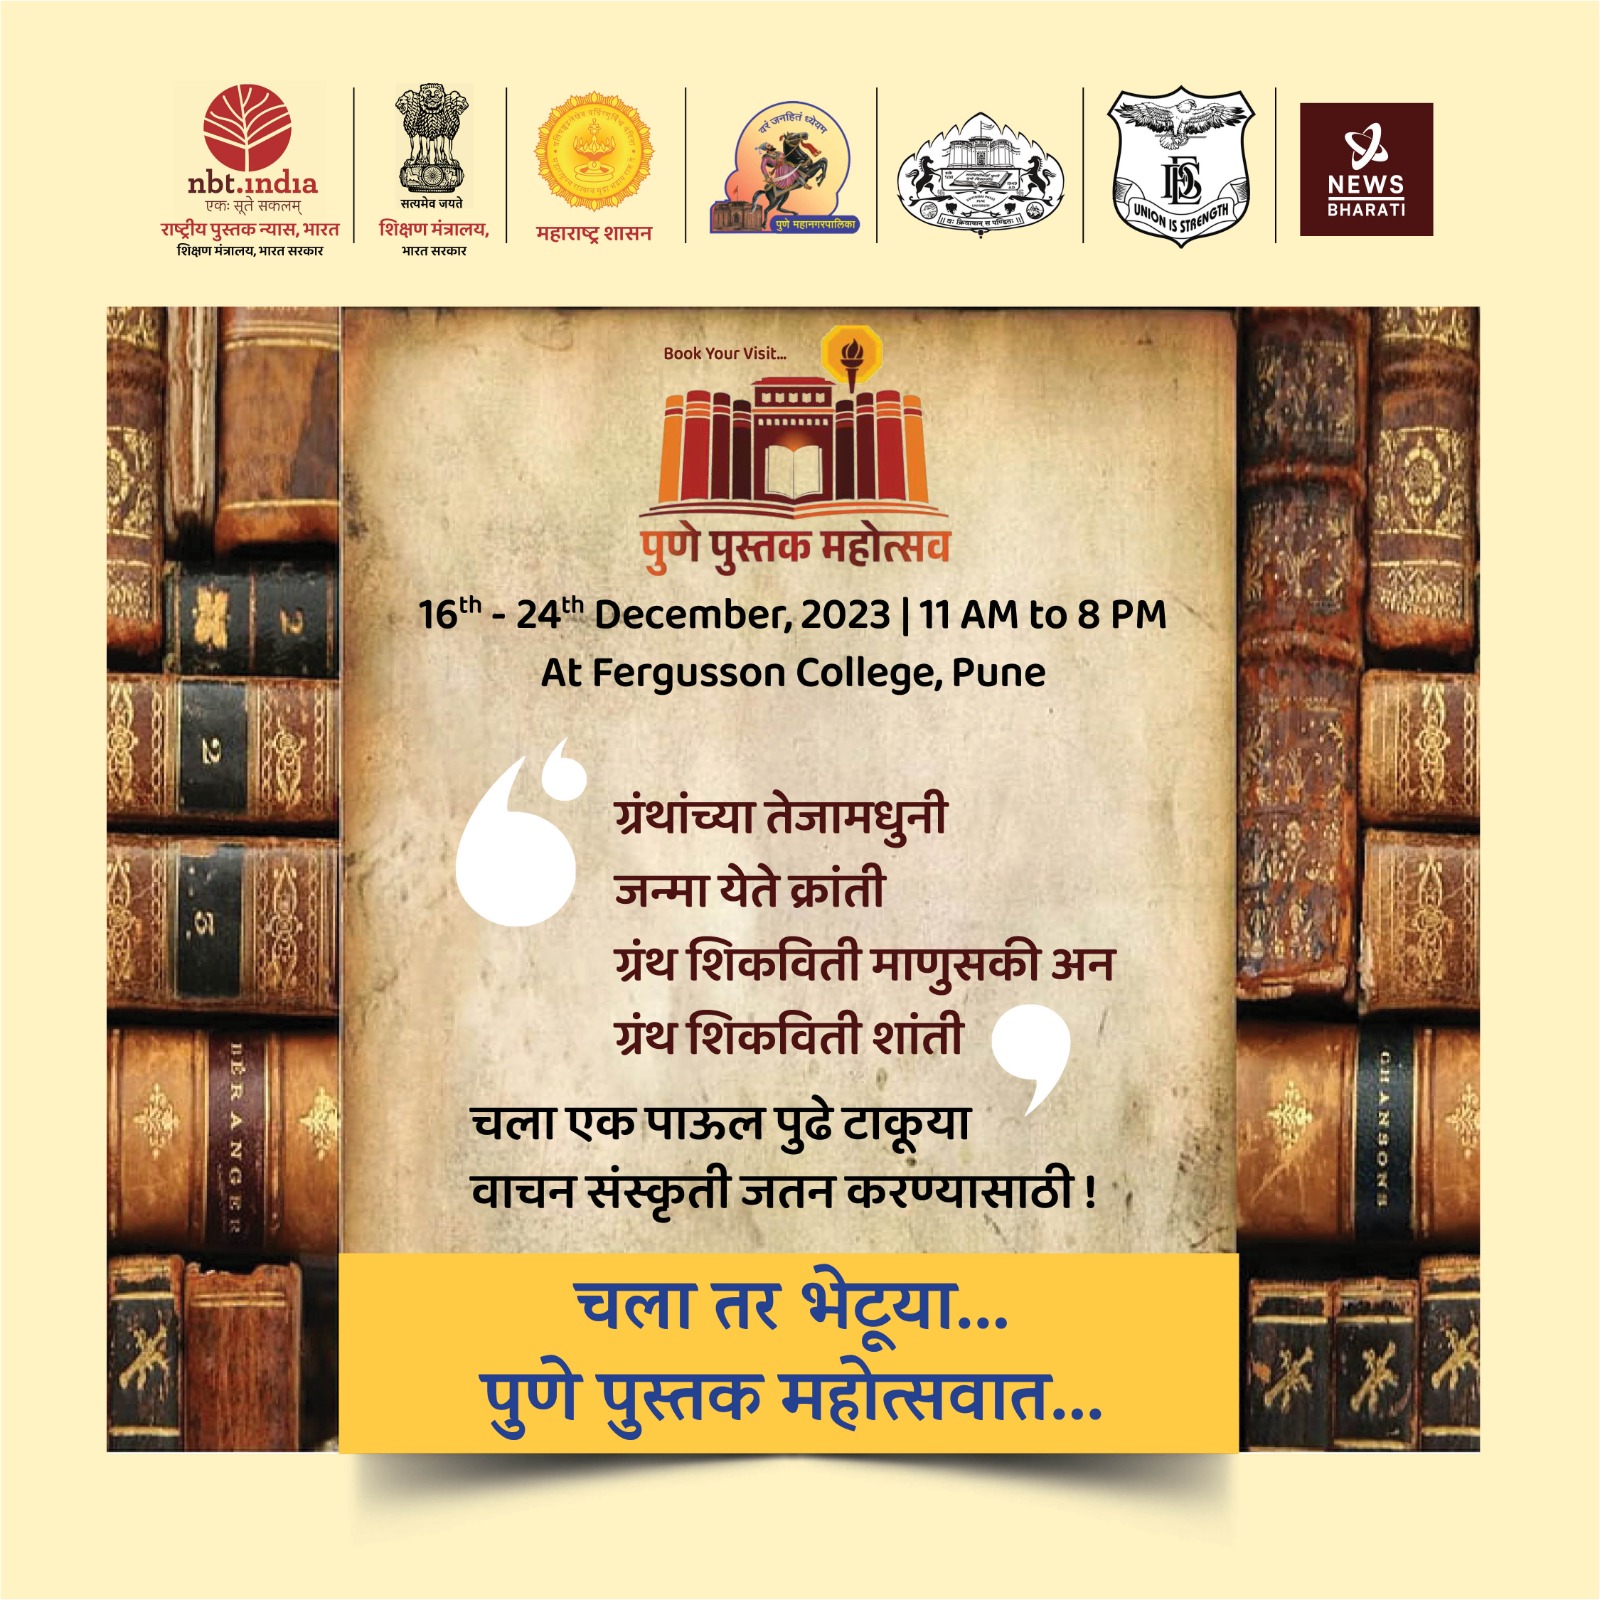 Pune book festival at Fergusson college